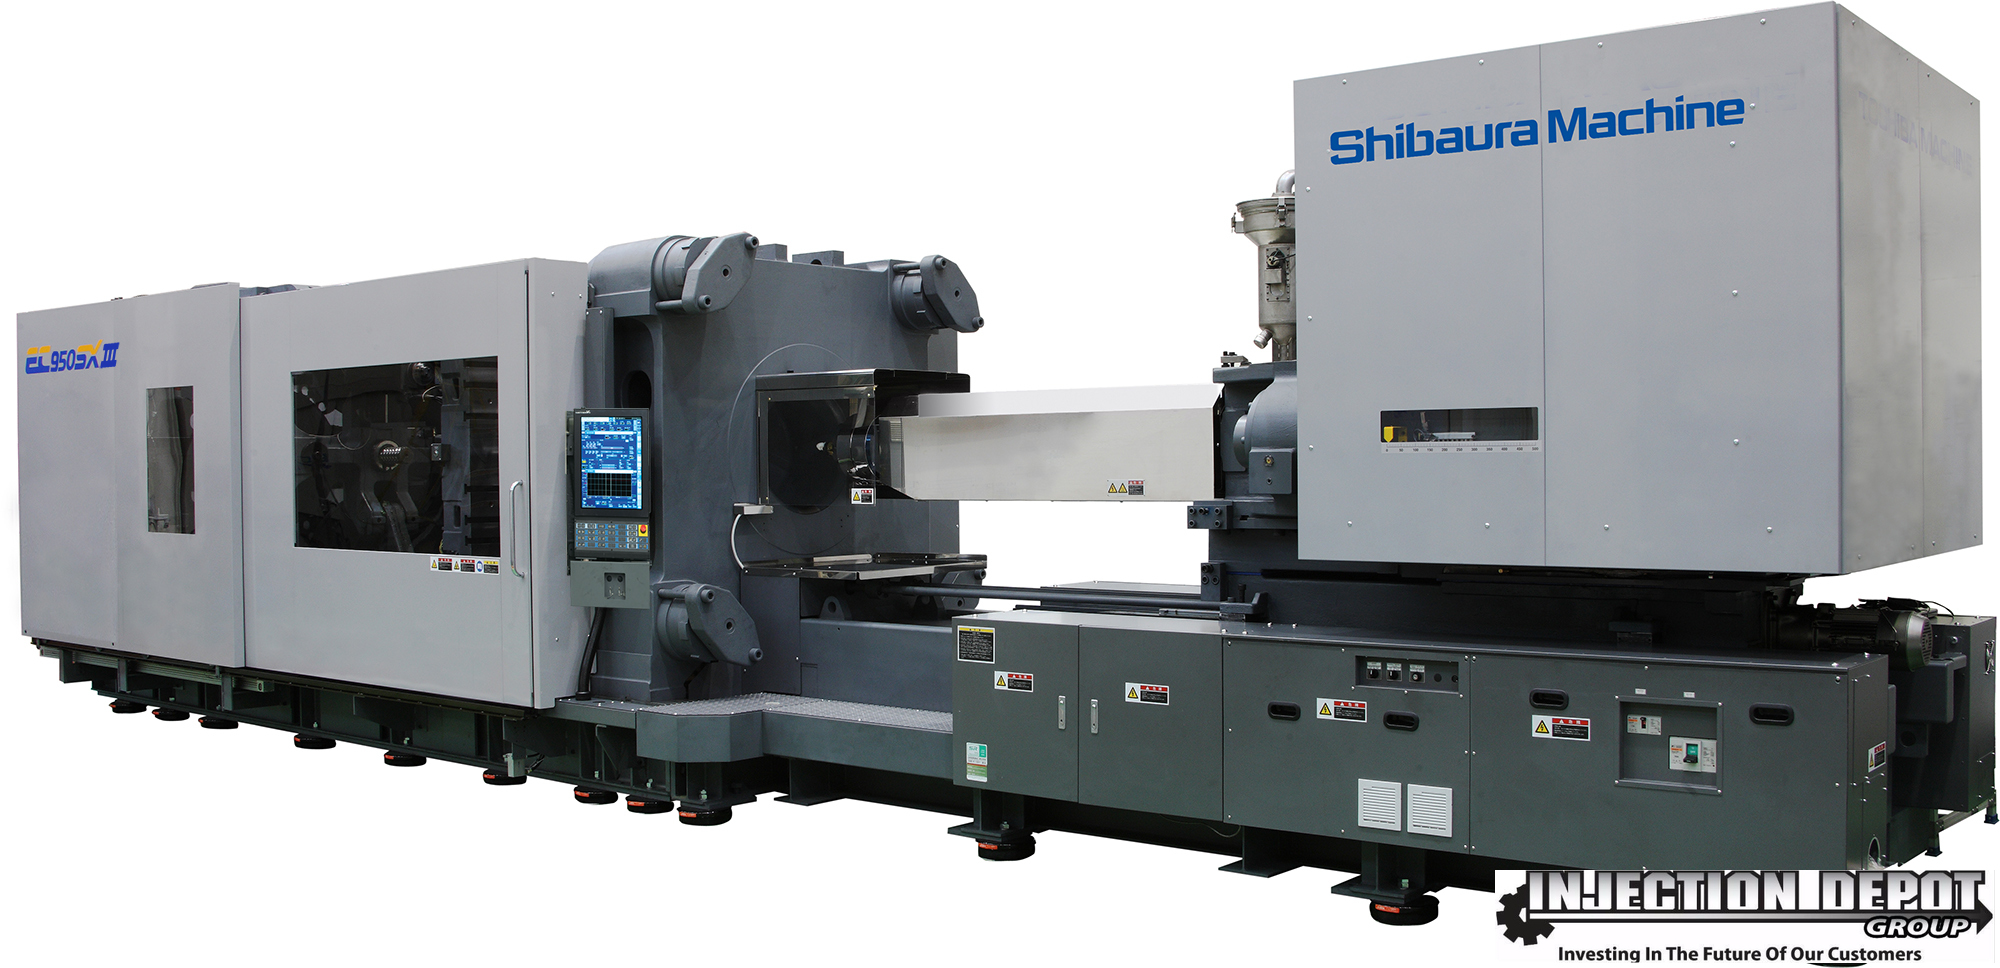 Shibaura Machine EC950SXIIIV70-i78 B Horizontal Injection Moulding Machines | INJECTION DEPOT GROUP